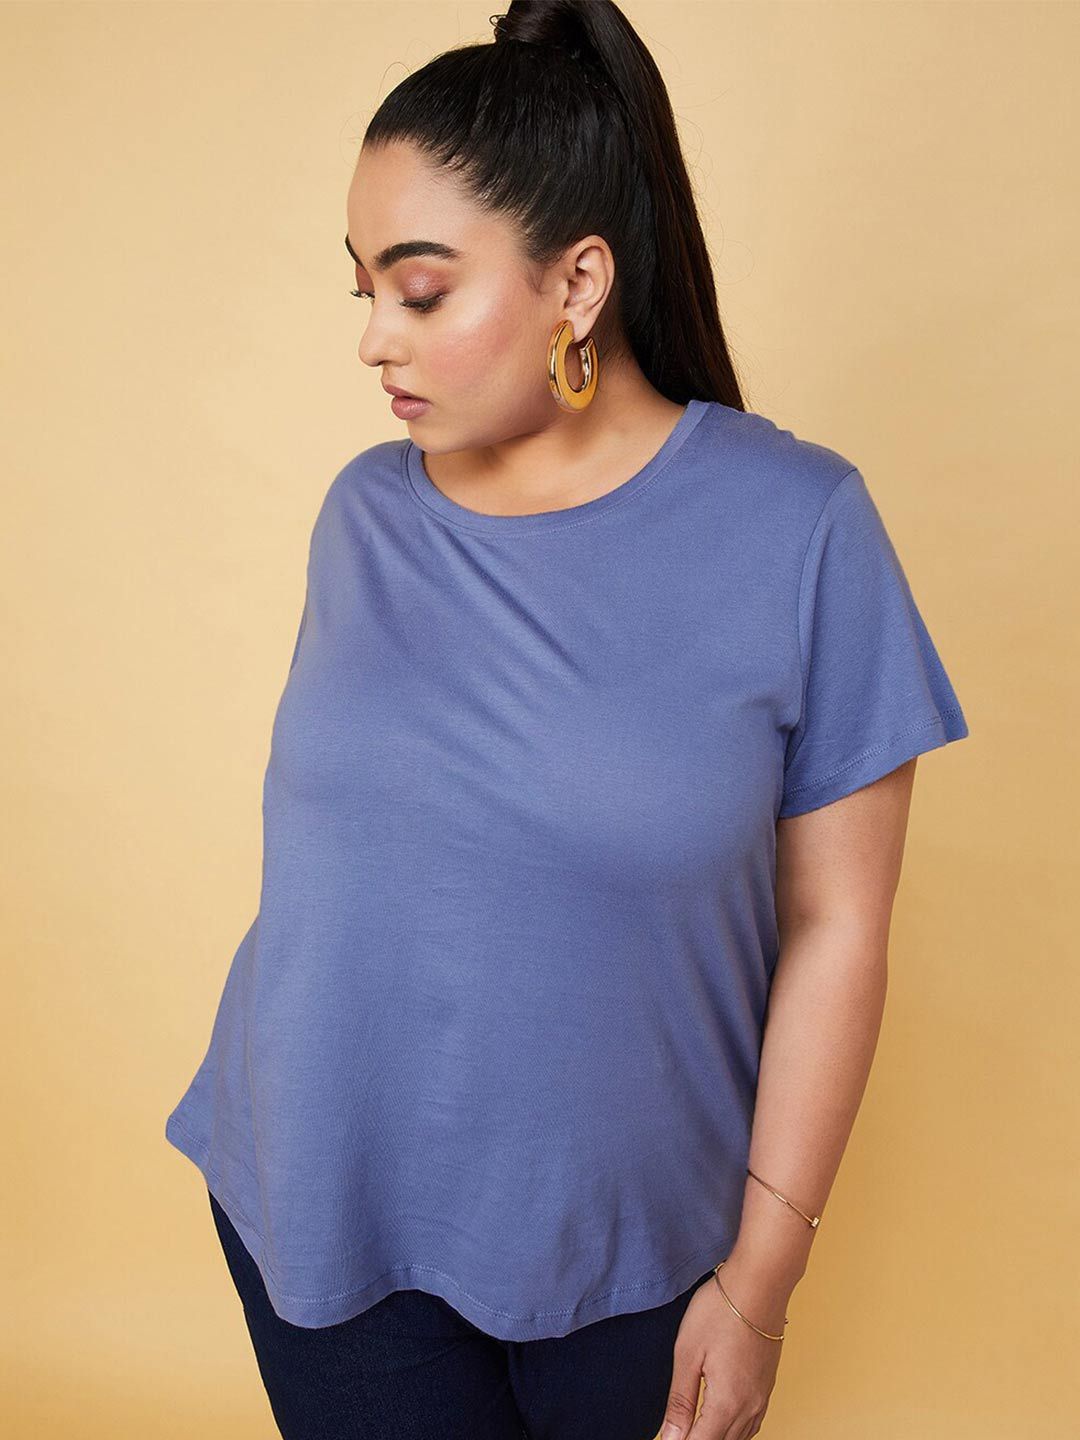 max Plus Size Round Neck Regular Cotton T-shirt Price in India